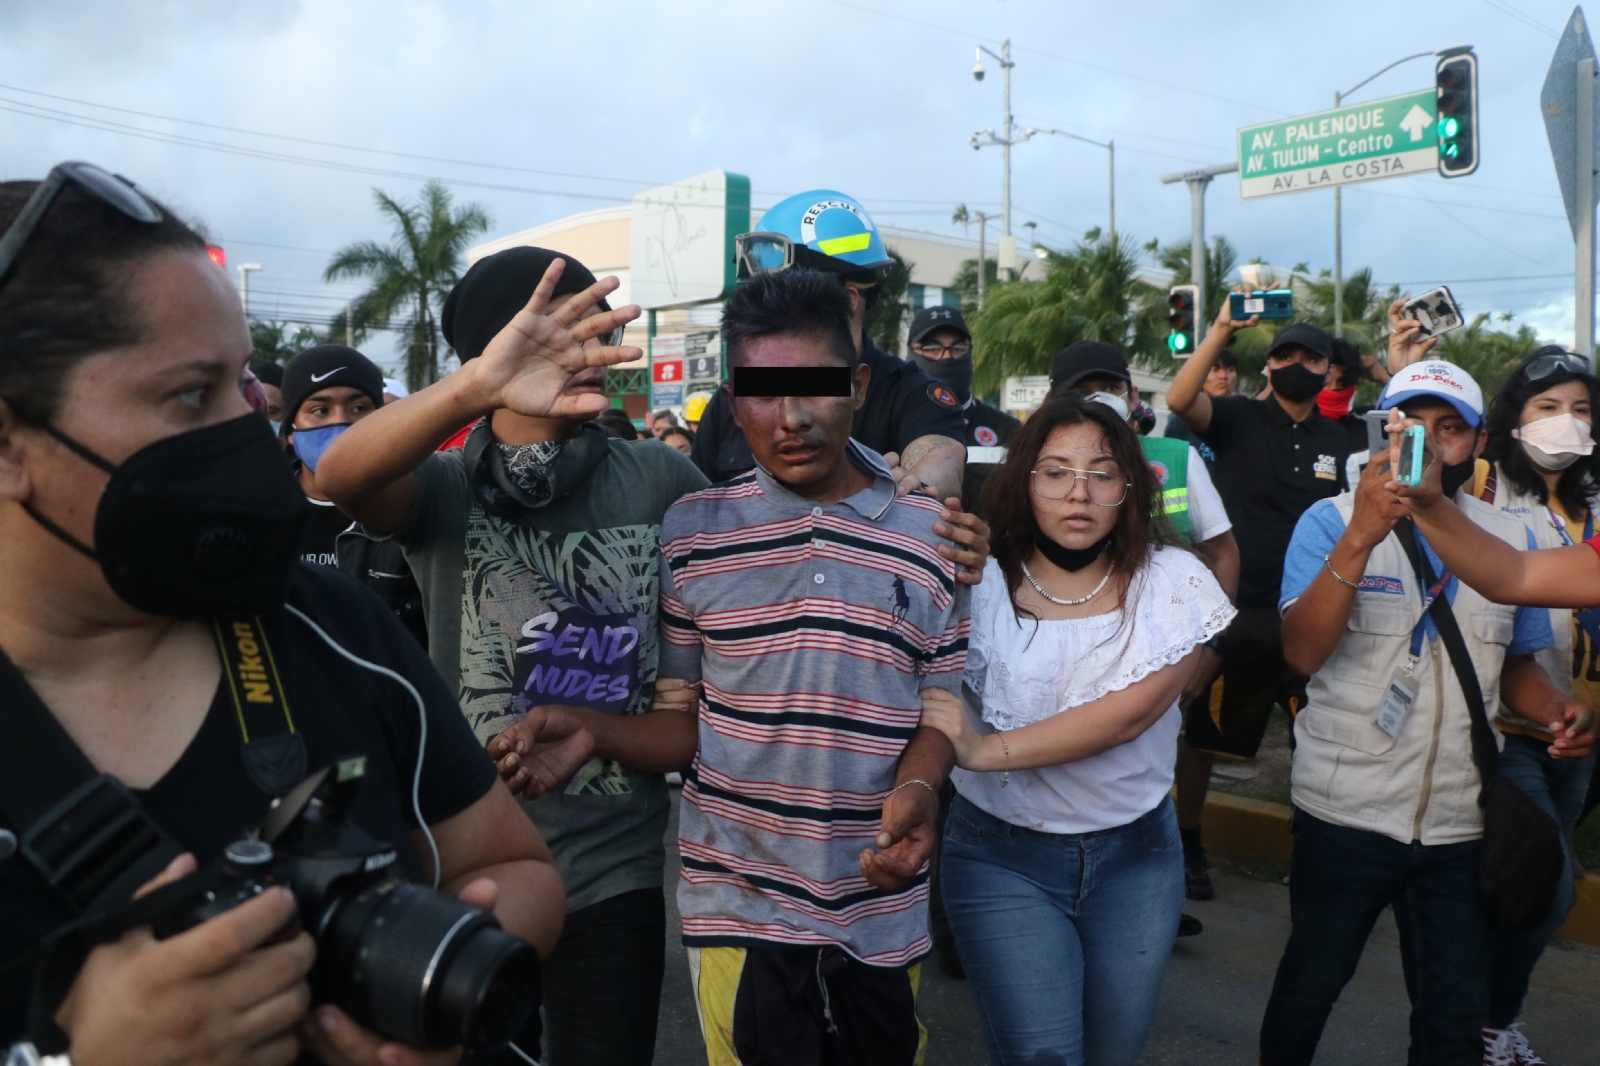 Vinculan a hombre por presunto abuso sexual en la marcha feminista de Cancún